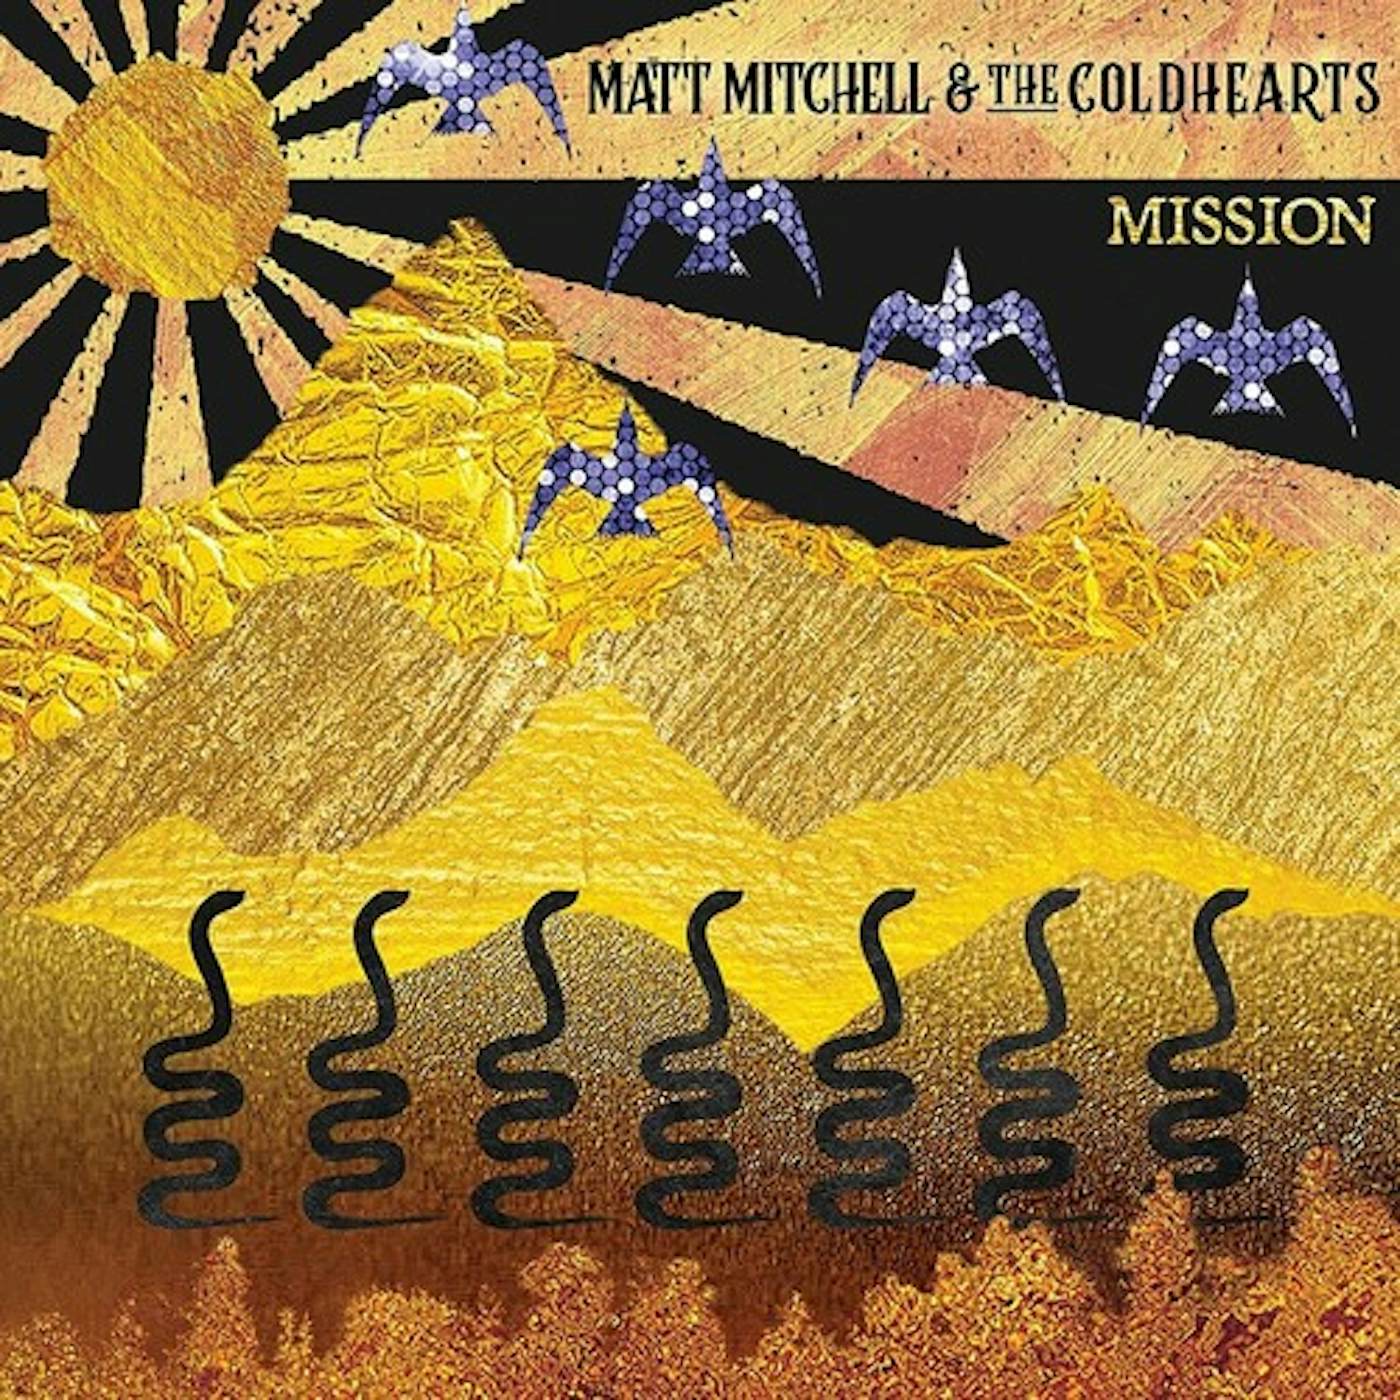 Matt Mitchell & the Coldhearts MISSION CD